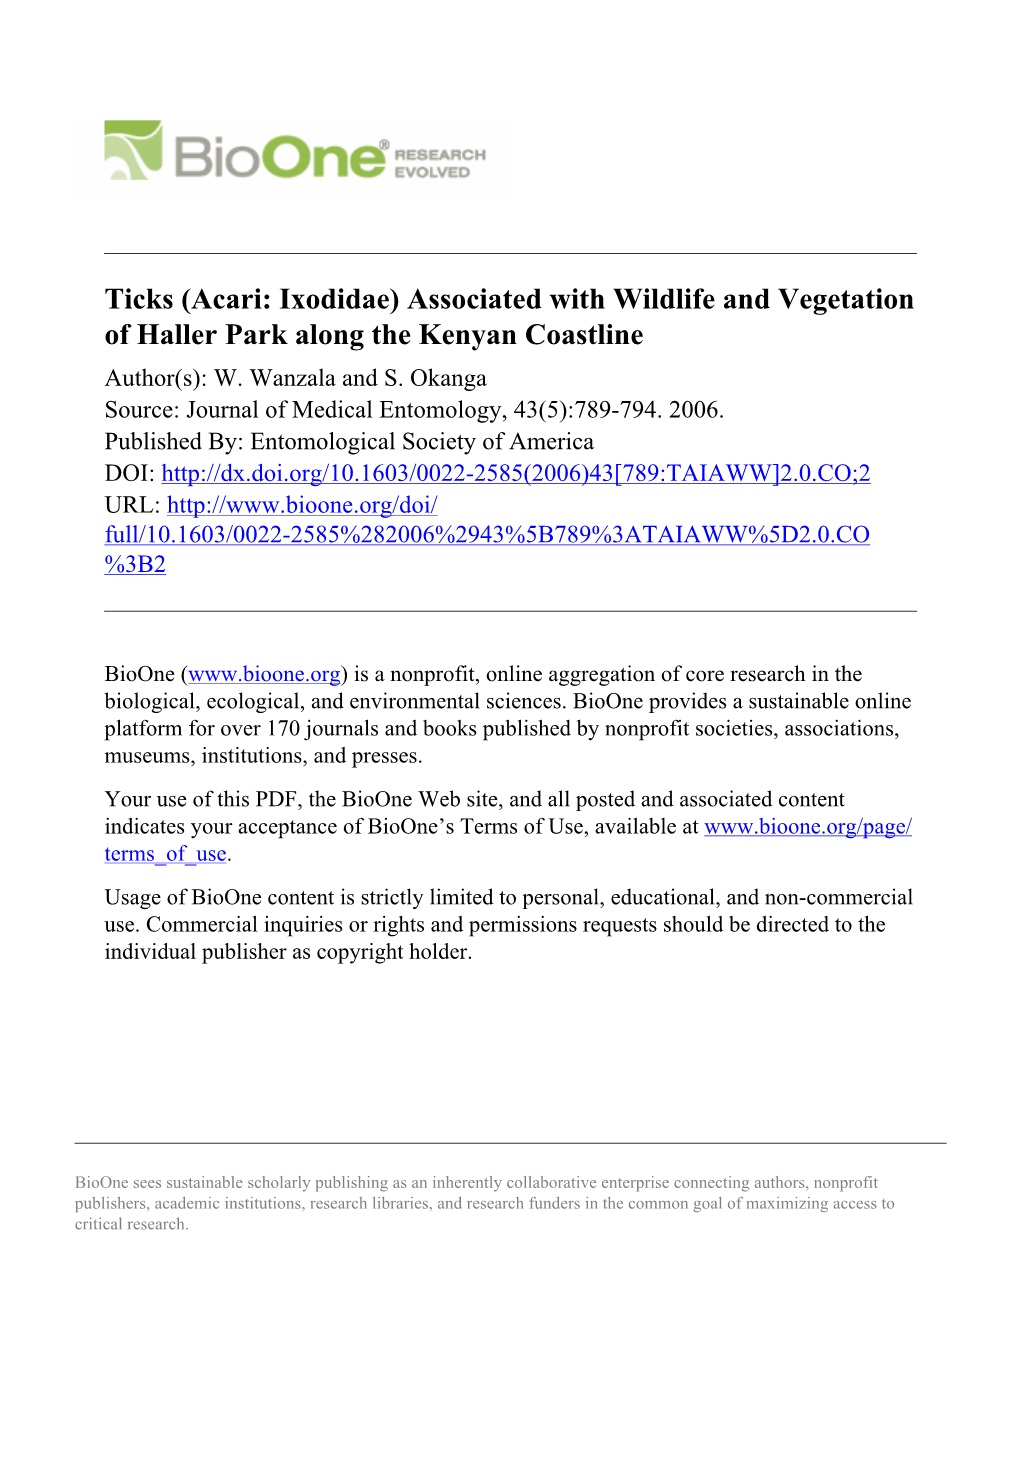 Ticks (Acari: Ixodidae) Associated with Wildlife and Vegetation of Haller Park Along the Kenyan Coastline Author(S): W